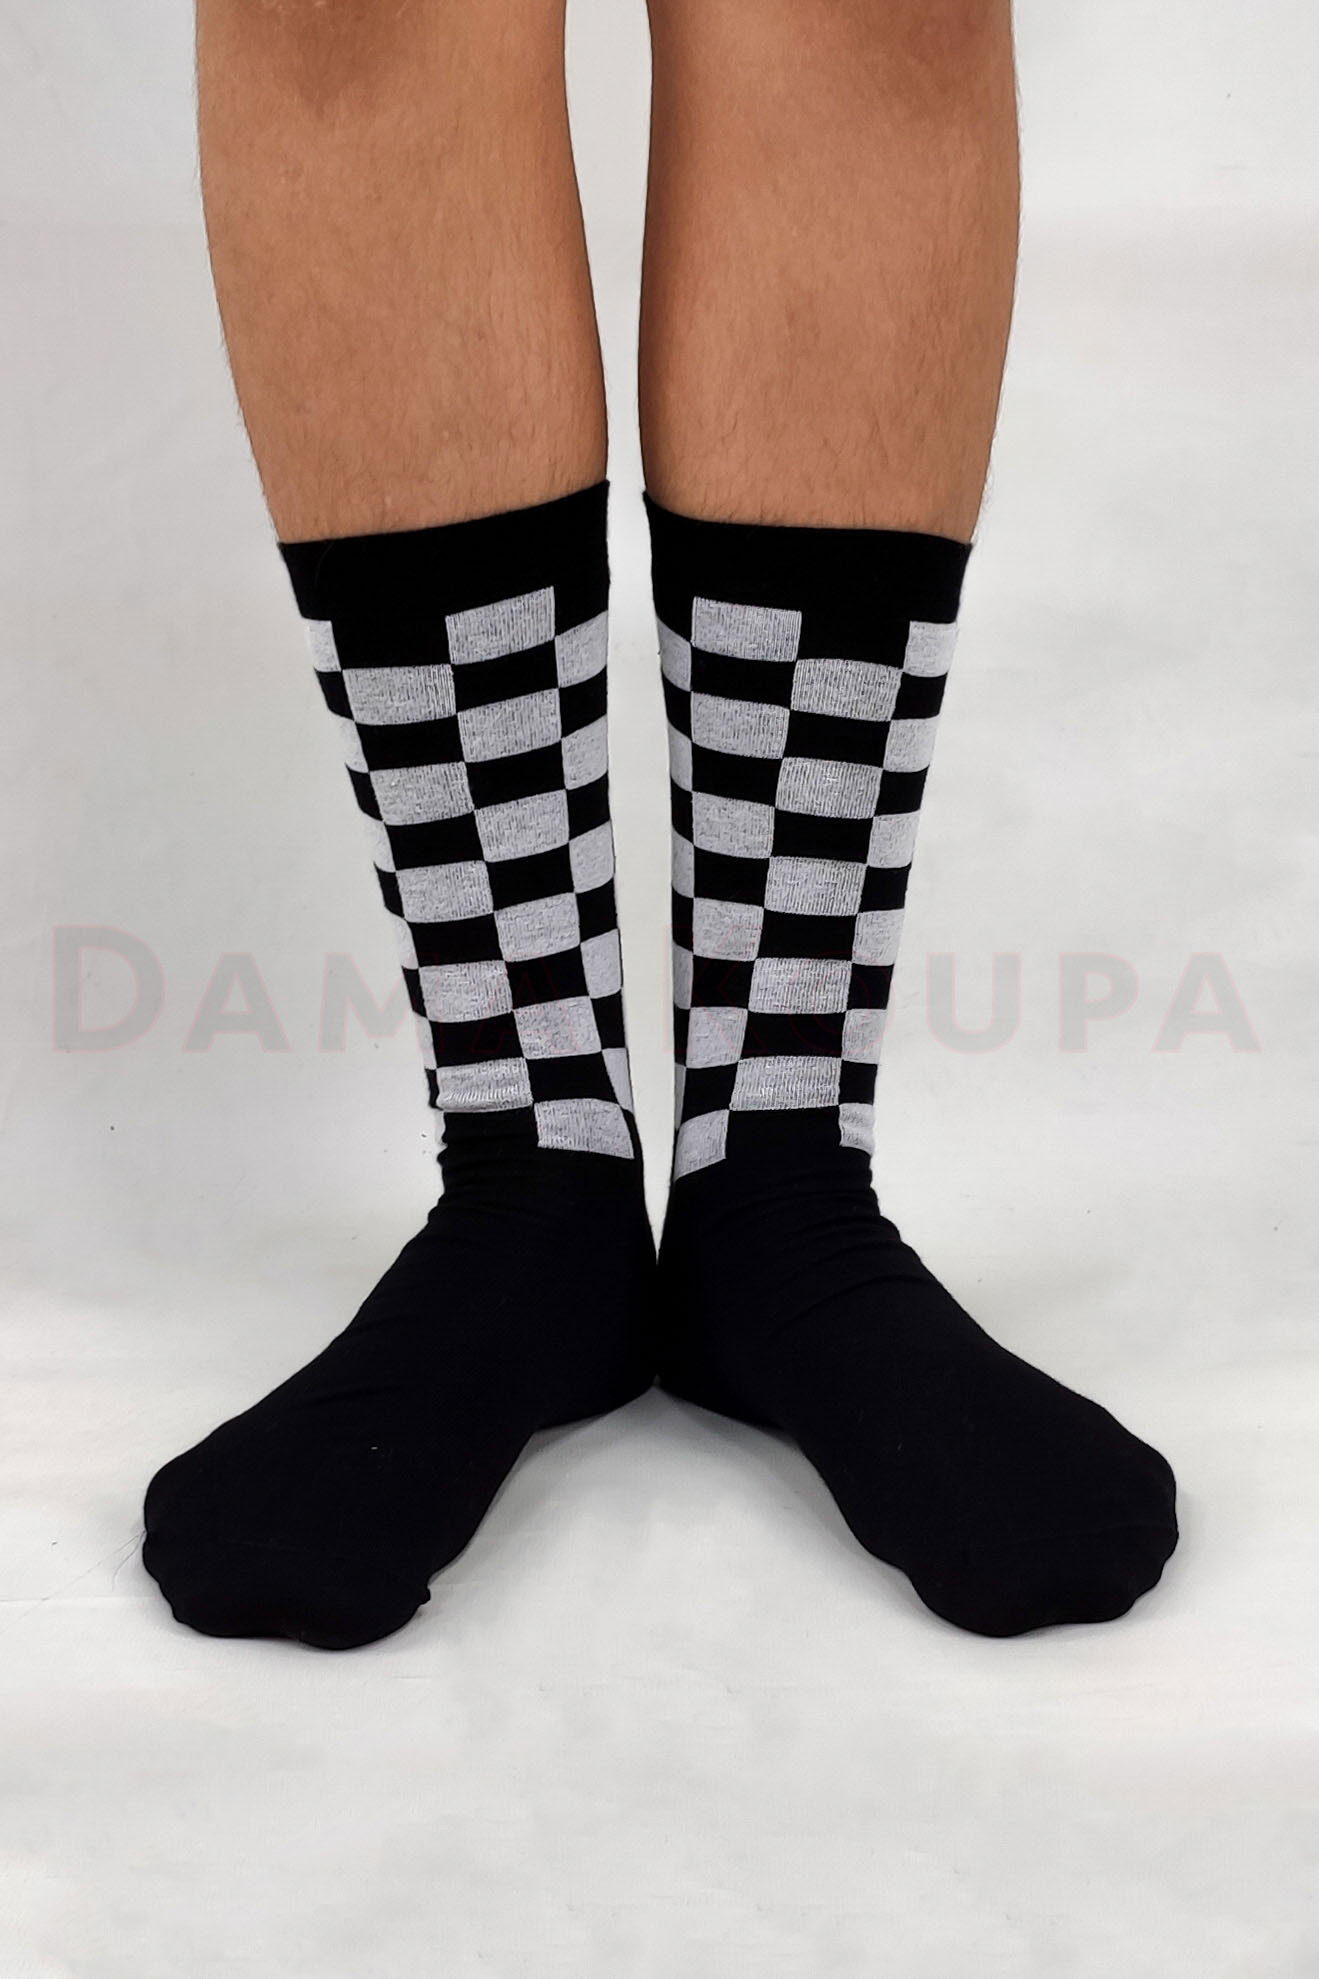 Vans Socks